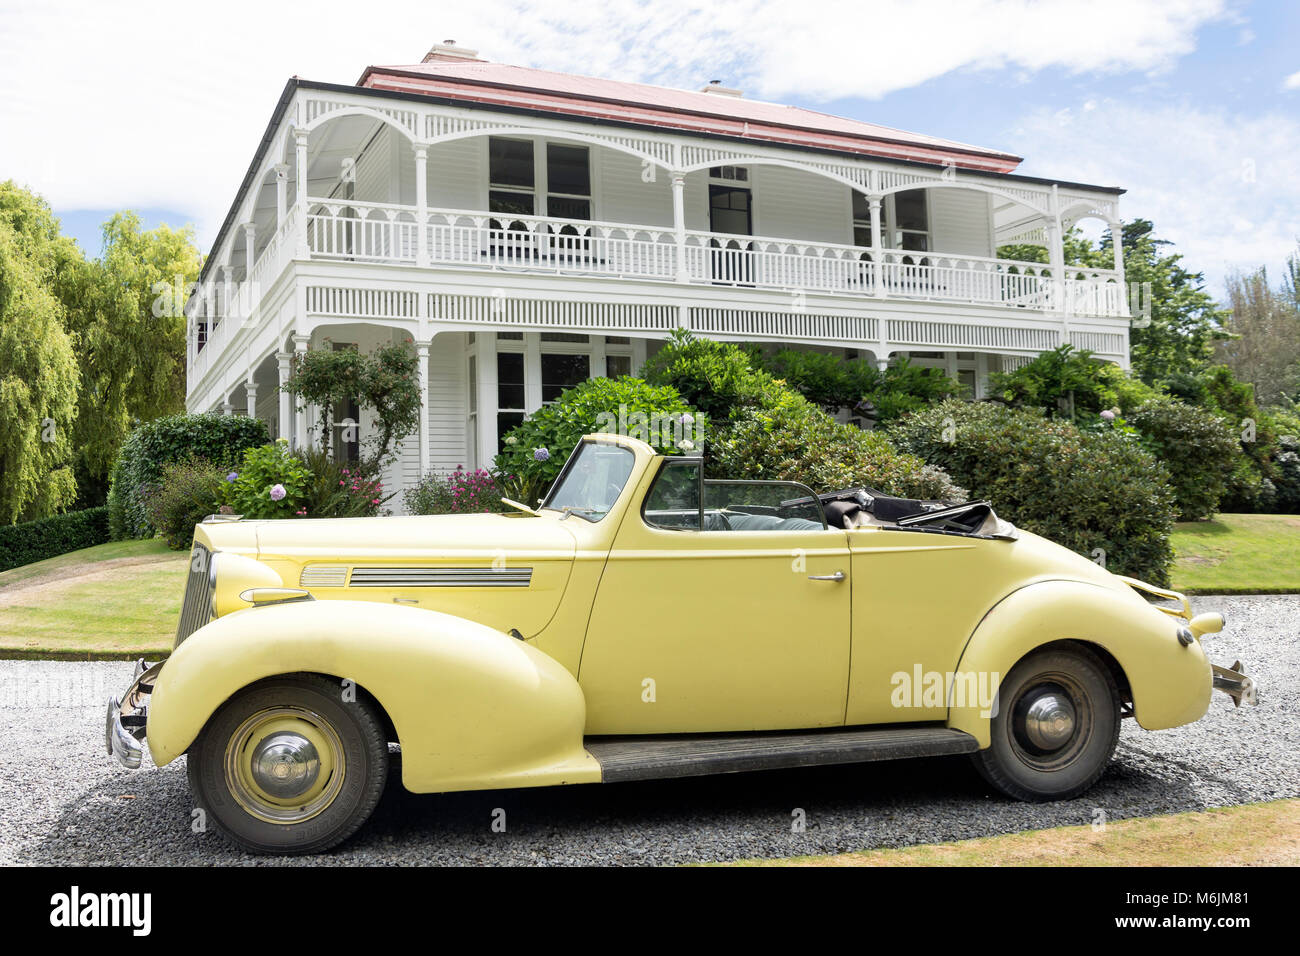 1939 Packard convertible sedan, Homesdale, maison, Rakaia Canterbury, Nouvelle-Zélande Banque D'Images